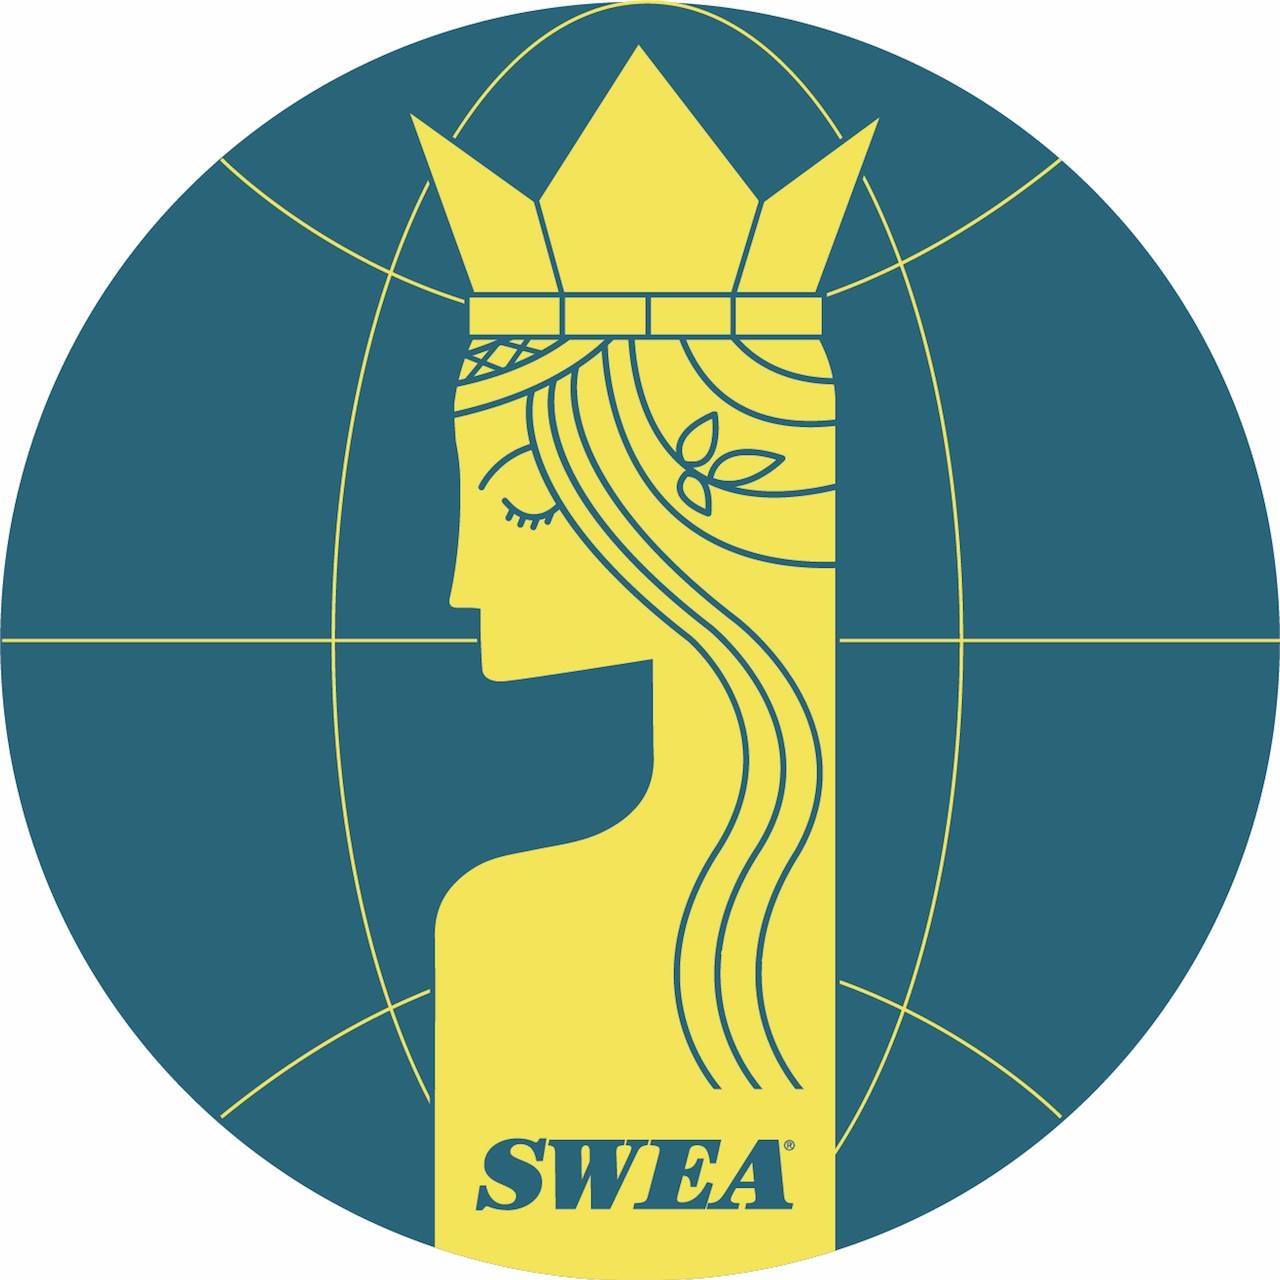 Swedish Speaking Organization in Sacramento California - Swedish Women’s Educational Association Orange County